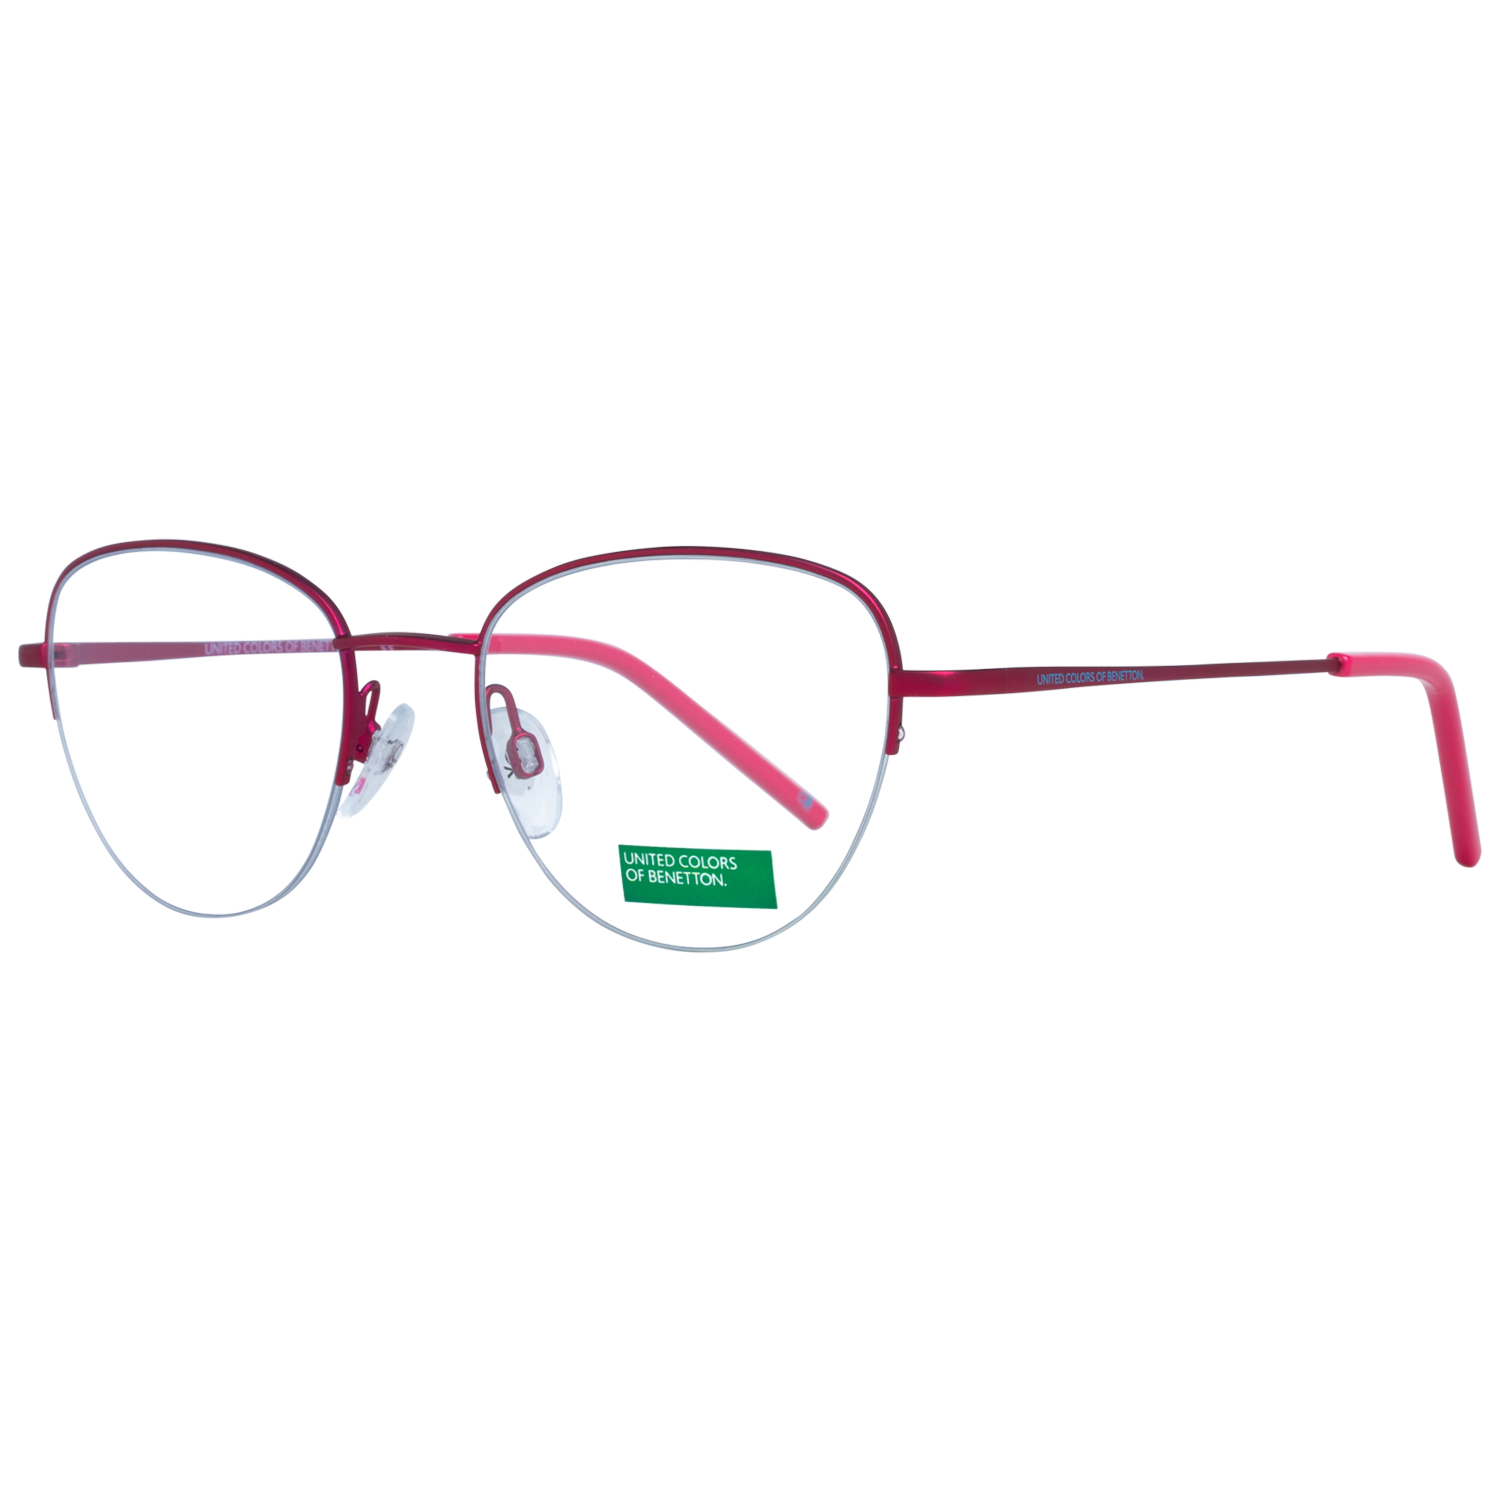 Benetton Frames Benetton Optical Frame BEO3024 205 50 Eyeglasses Eyewear UK USA Australia 